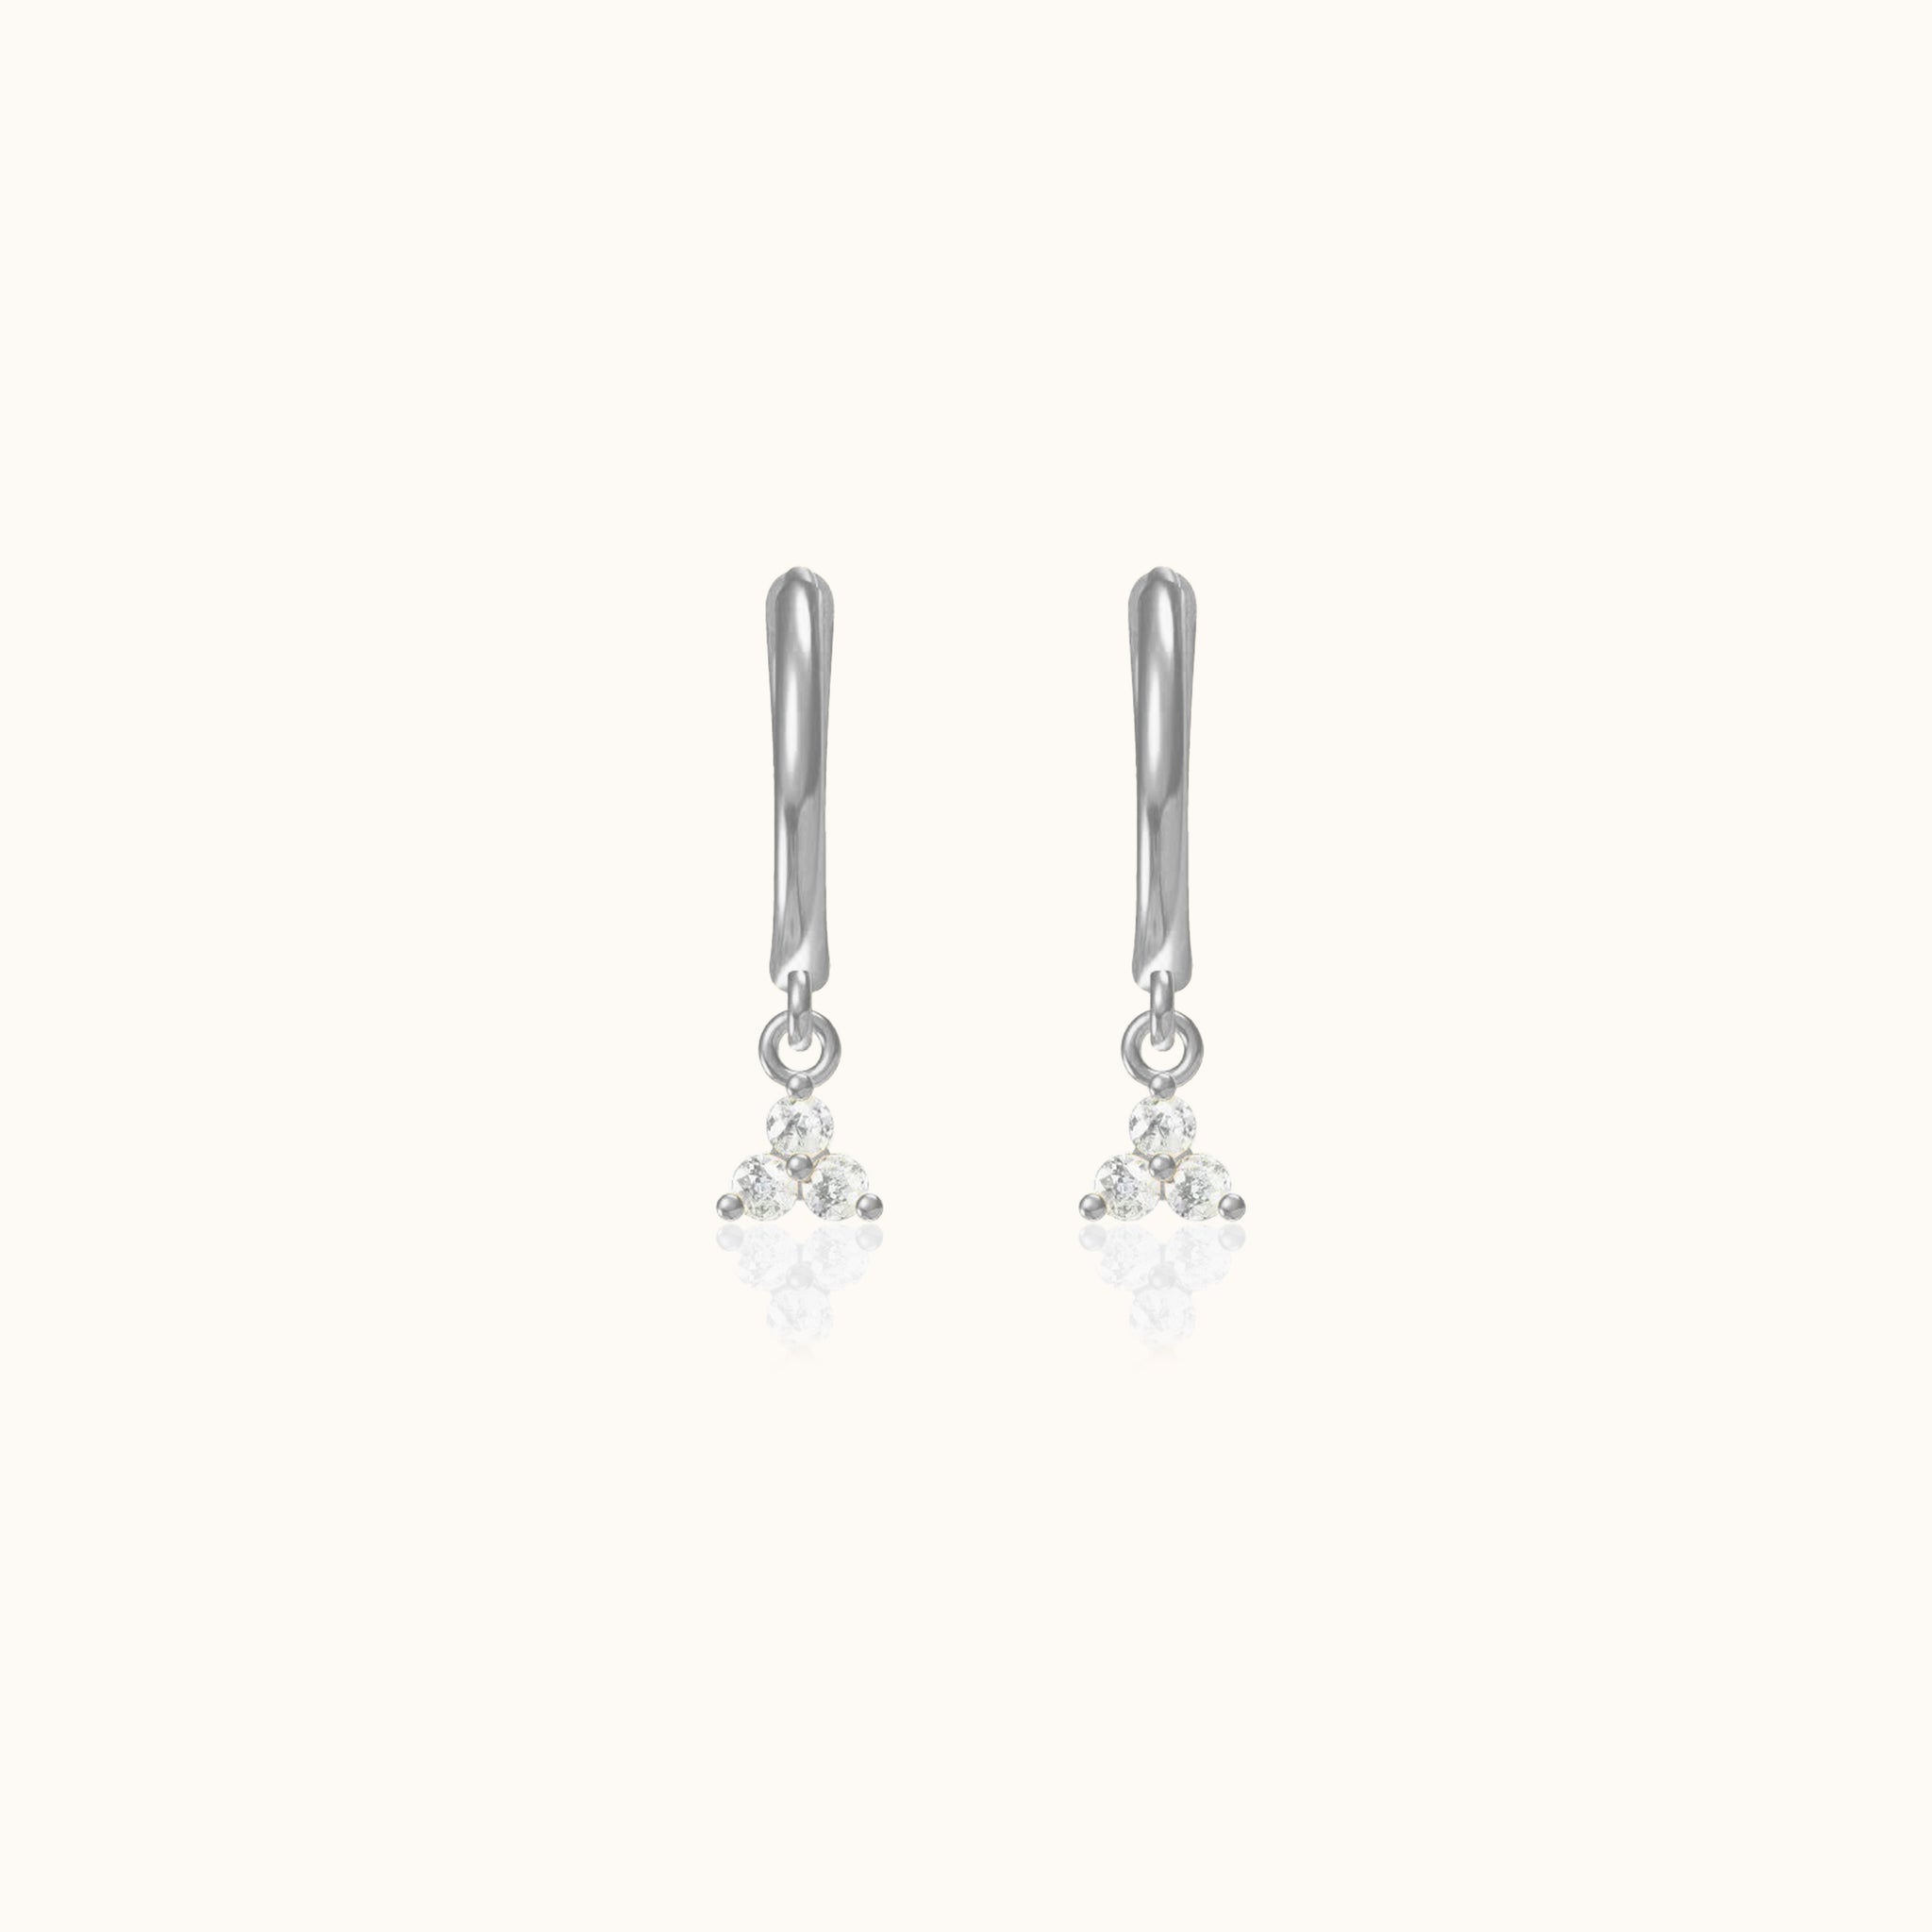 Classic Crystal Trefoil Earrings Mini Lotus Triple CZ 925 Sterling Silver Trinity Cluster Dangle Hoops by Doviana